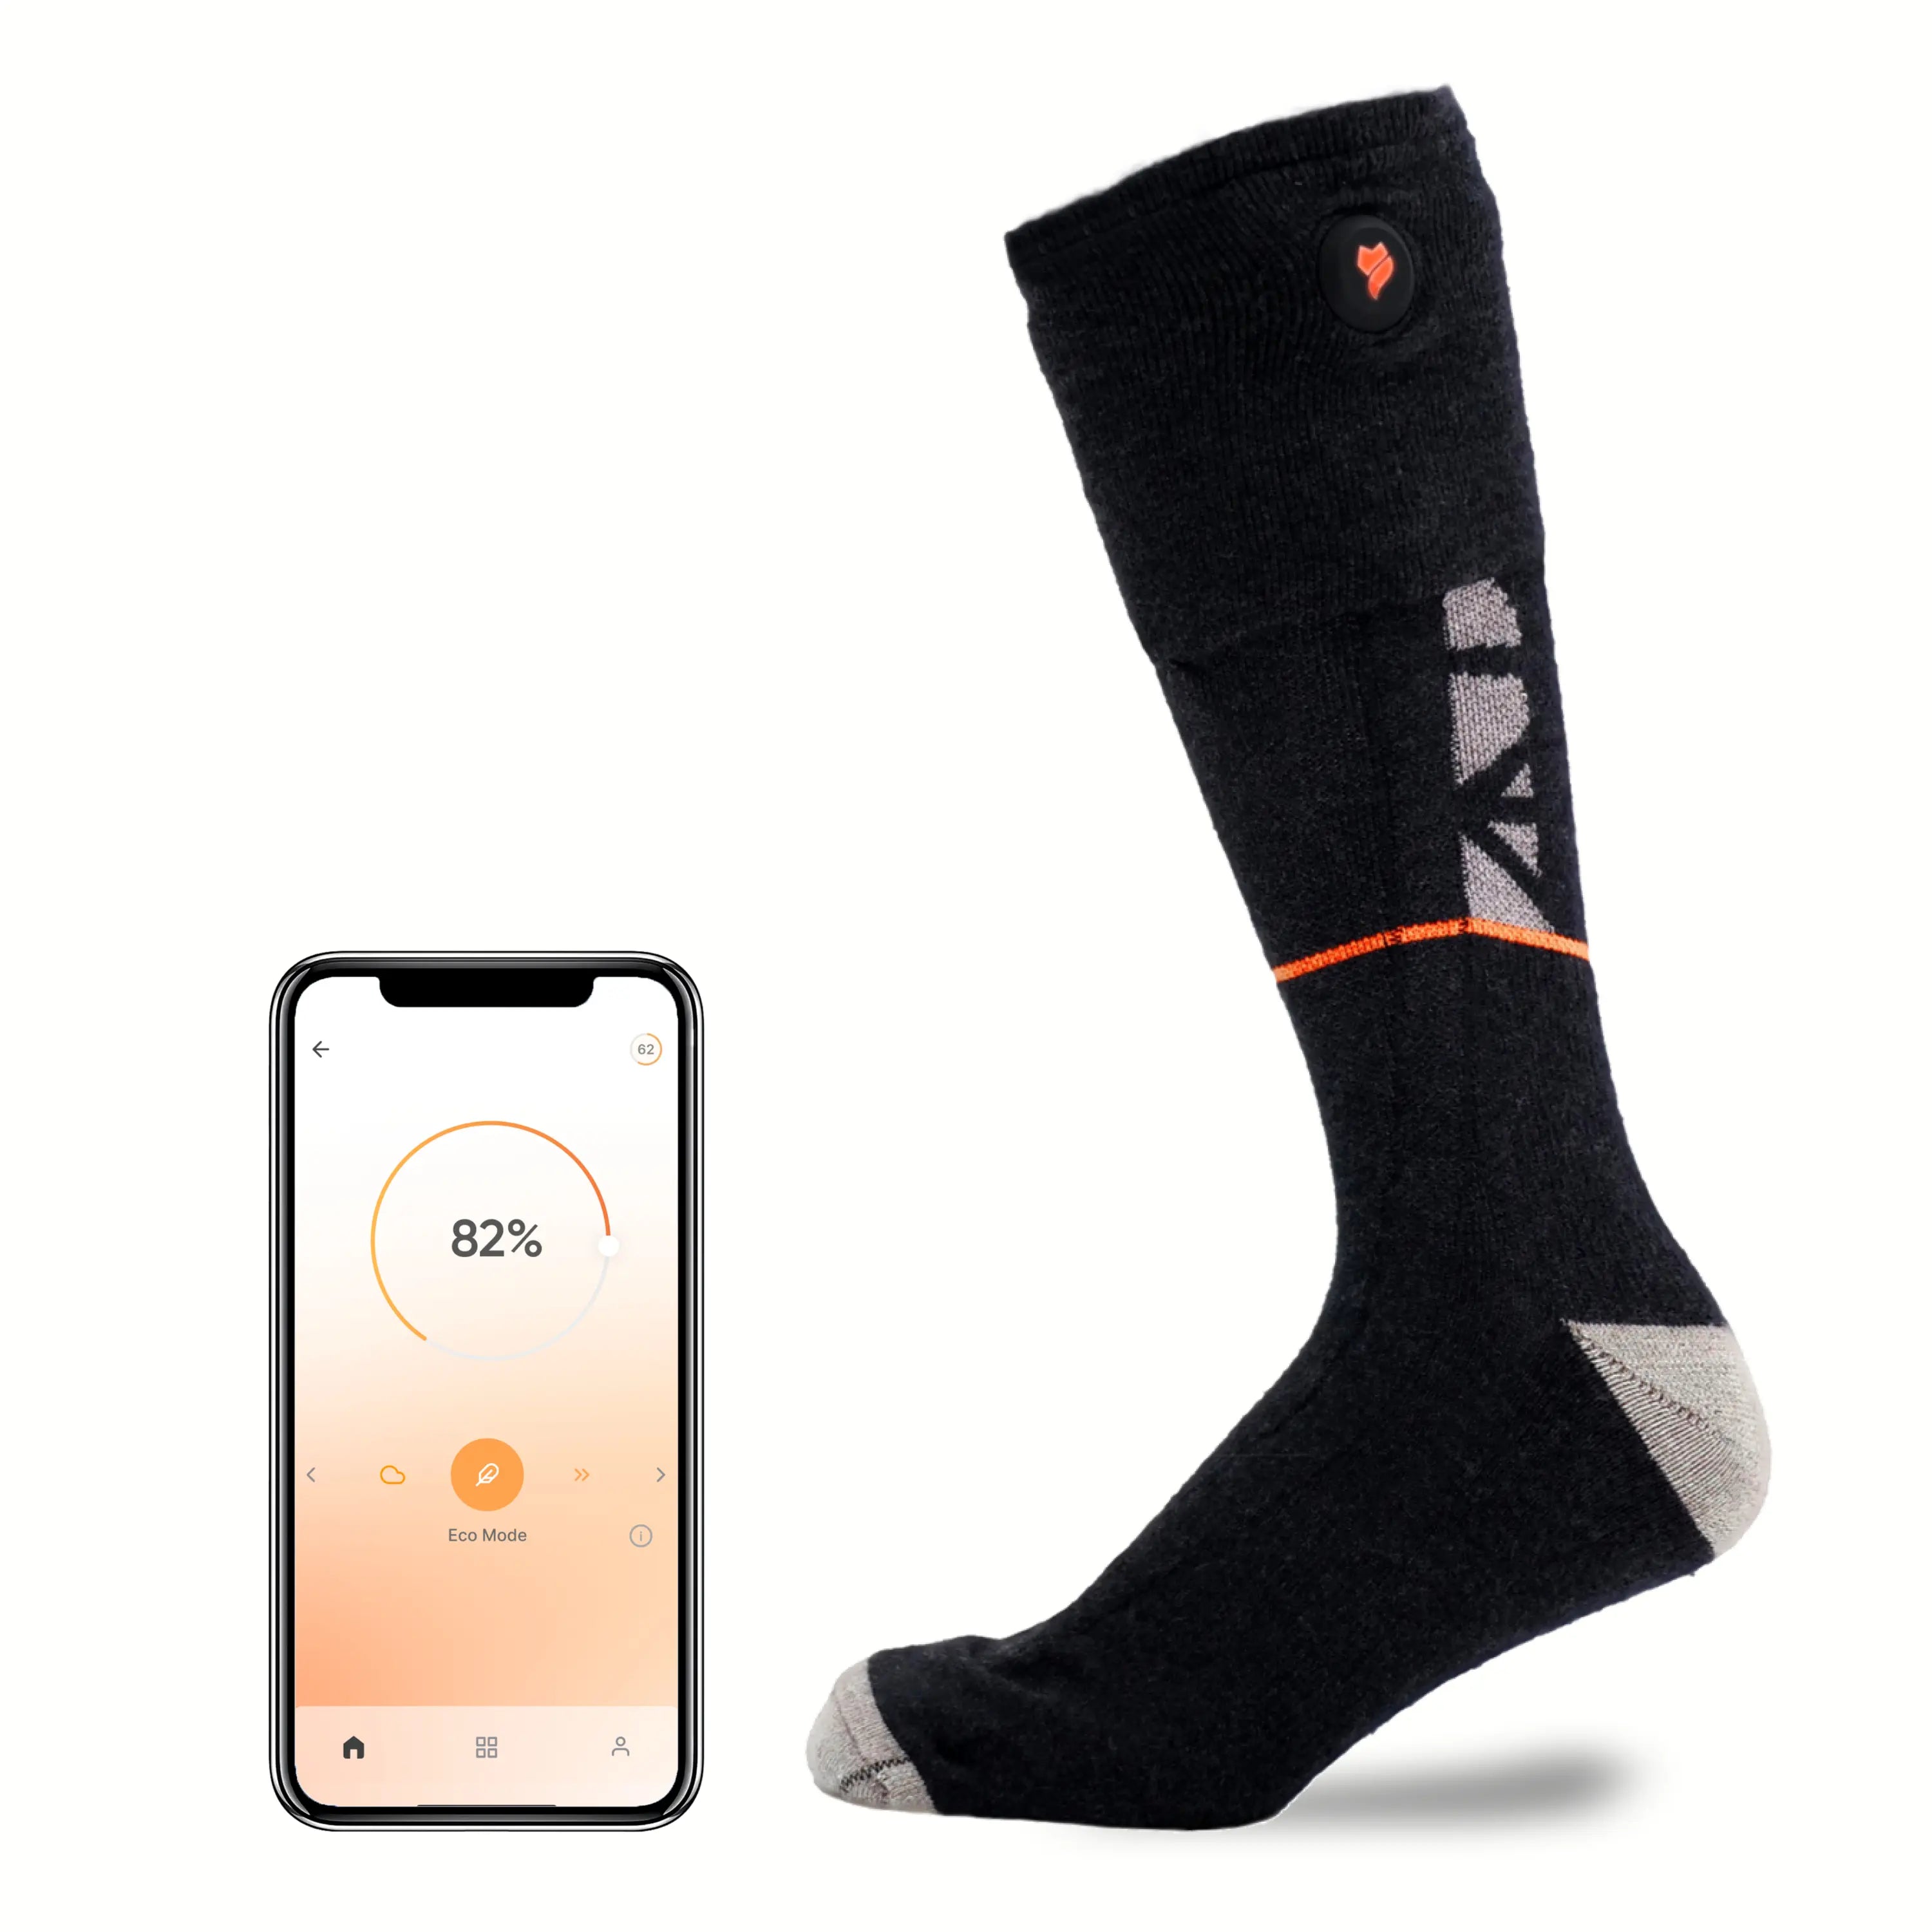 Vulpés HeatSock - Smart Heated Socks | Smartphone Control | Merino Wool